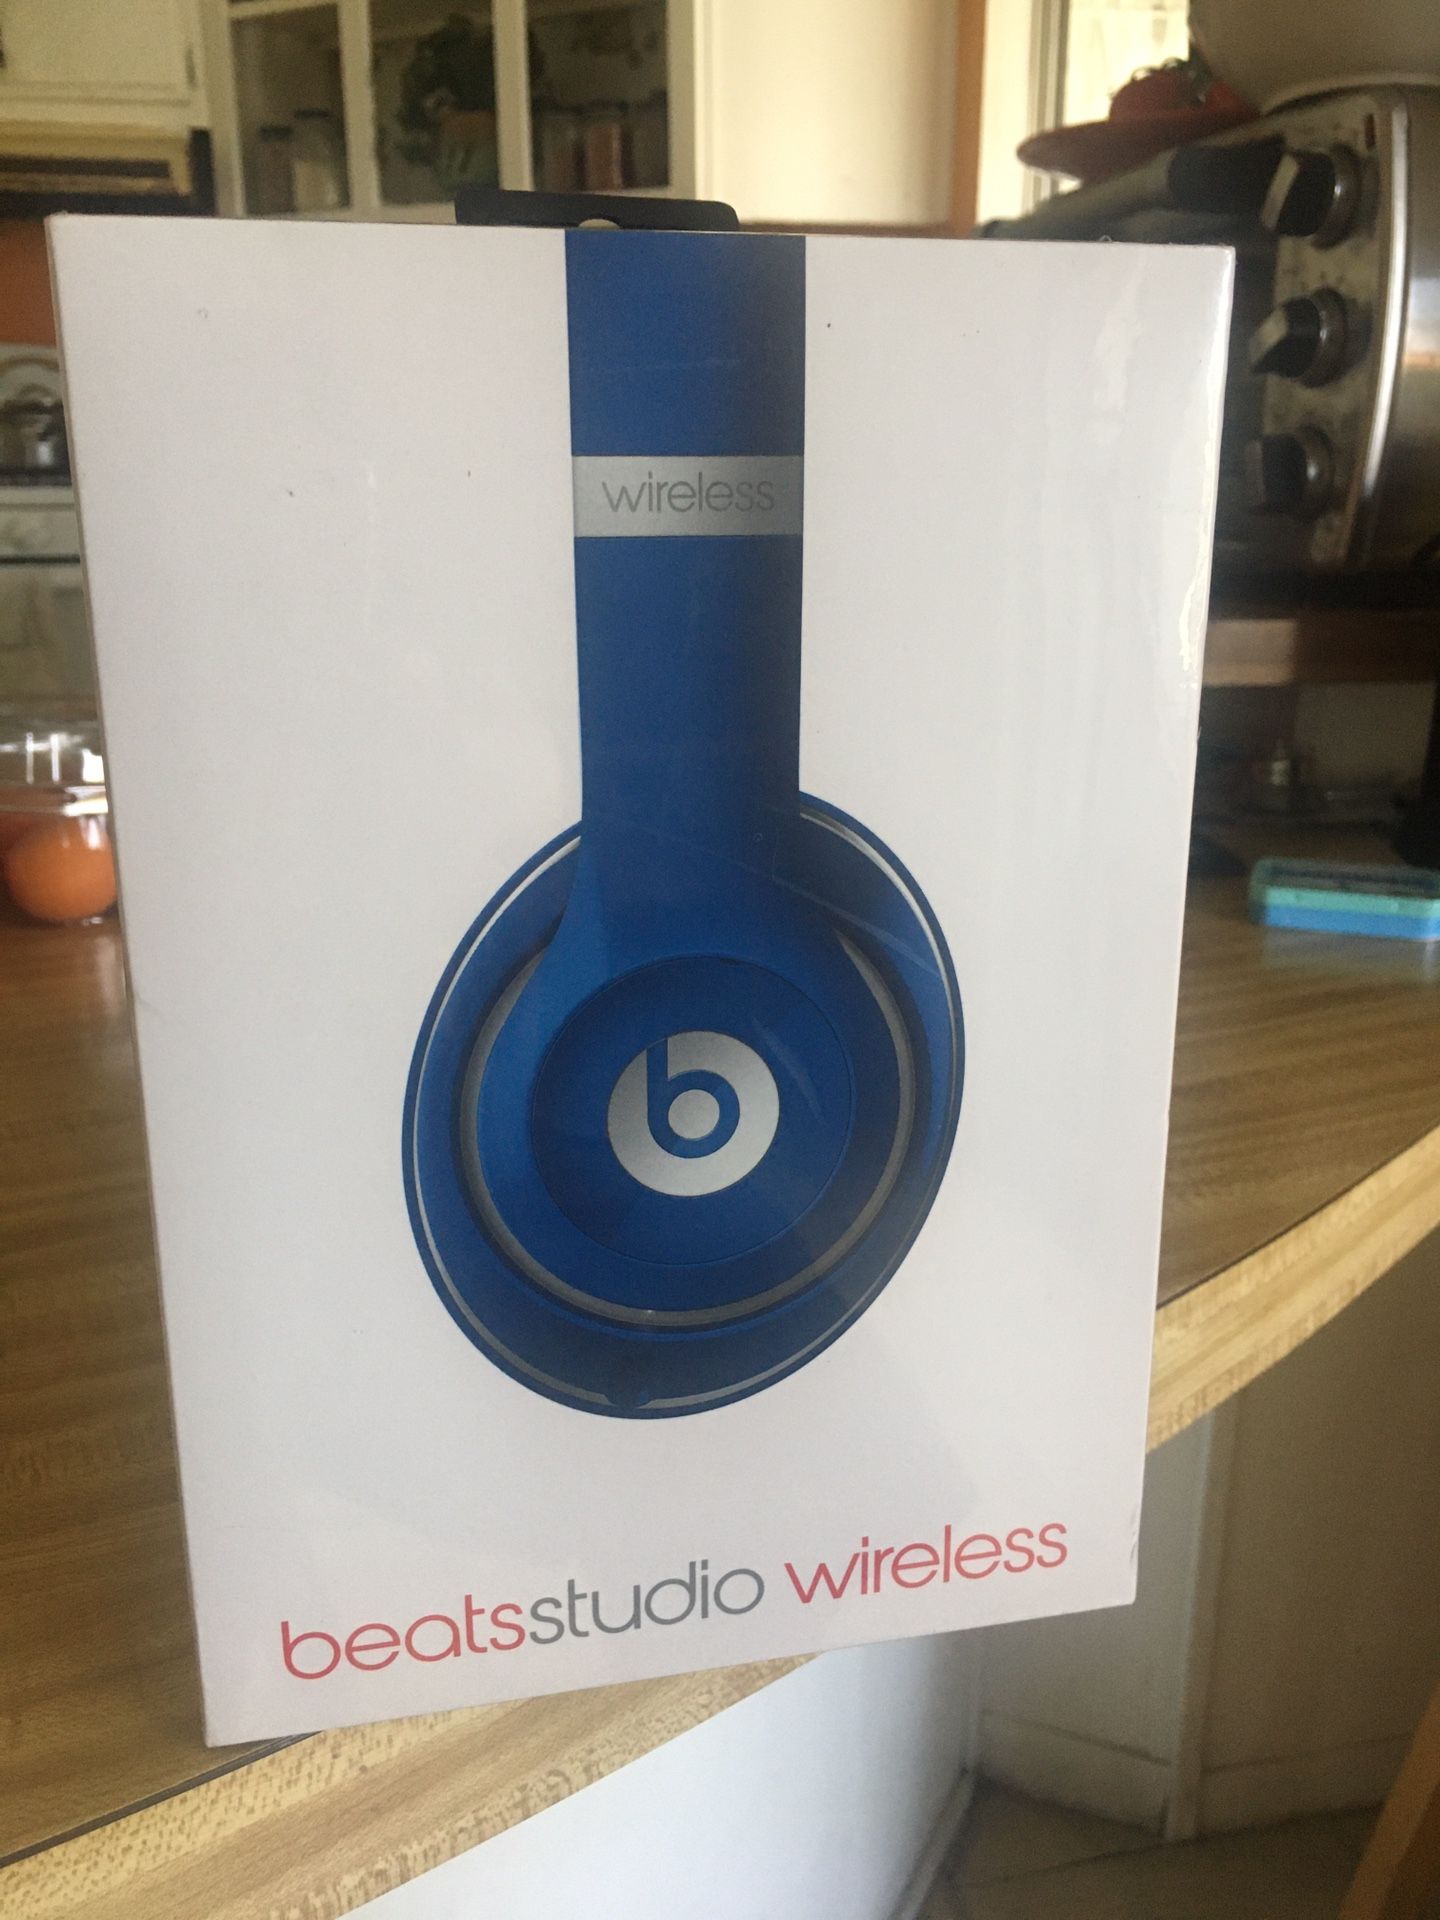 Beats studios wireless brand new